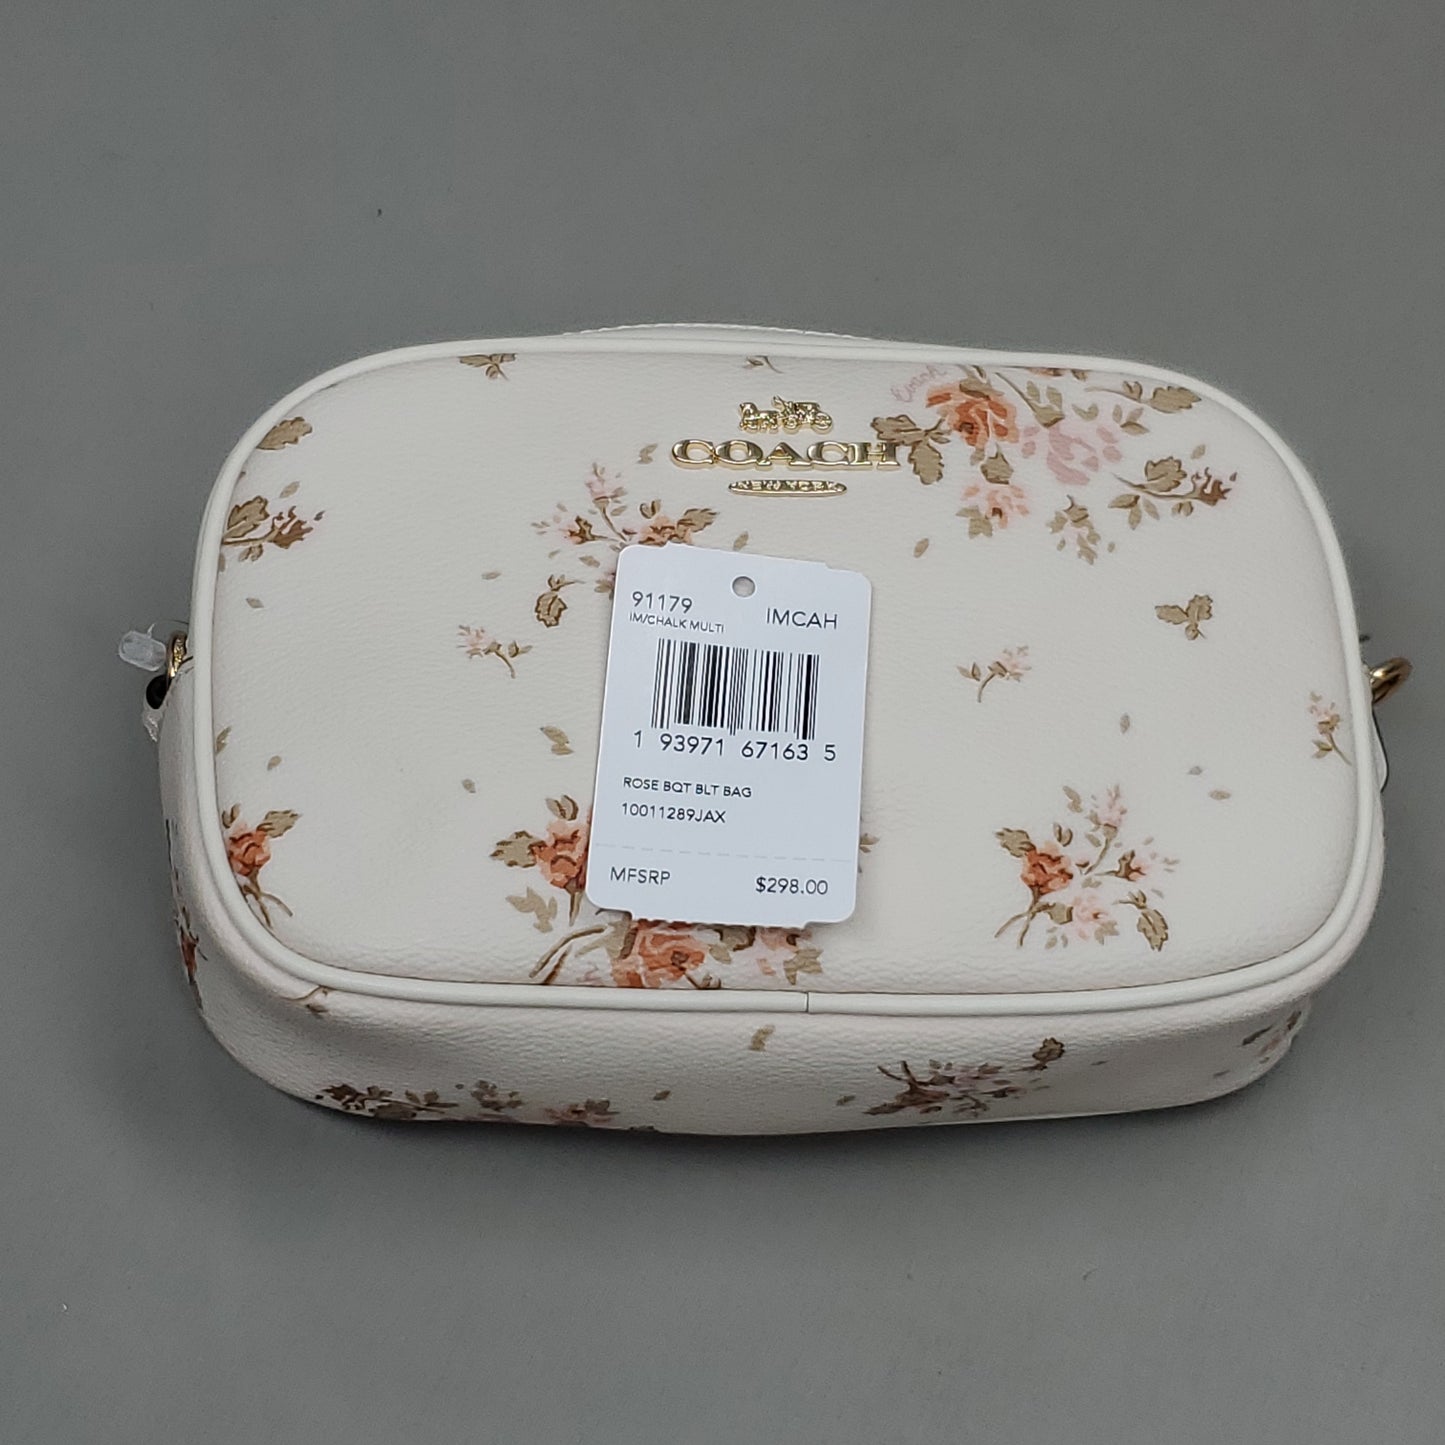 COACH Rose Bouquet Convertible Belt Bag White 91179 (New)